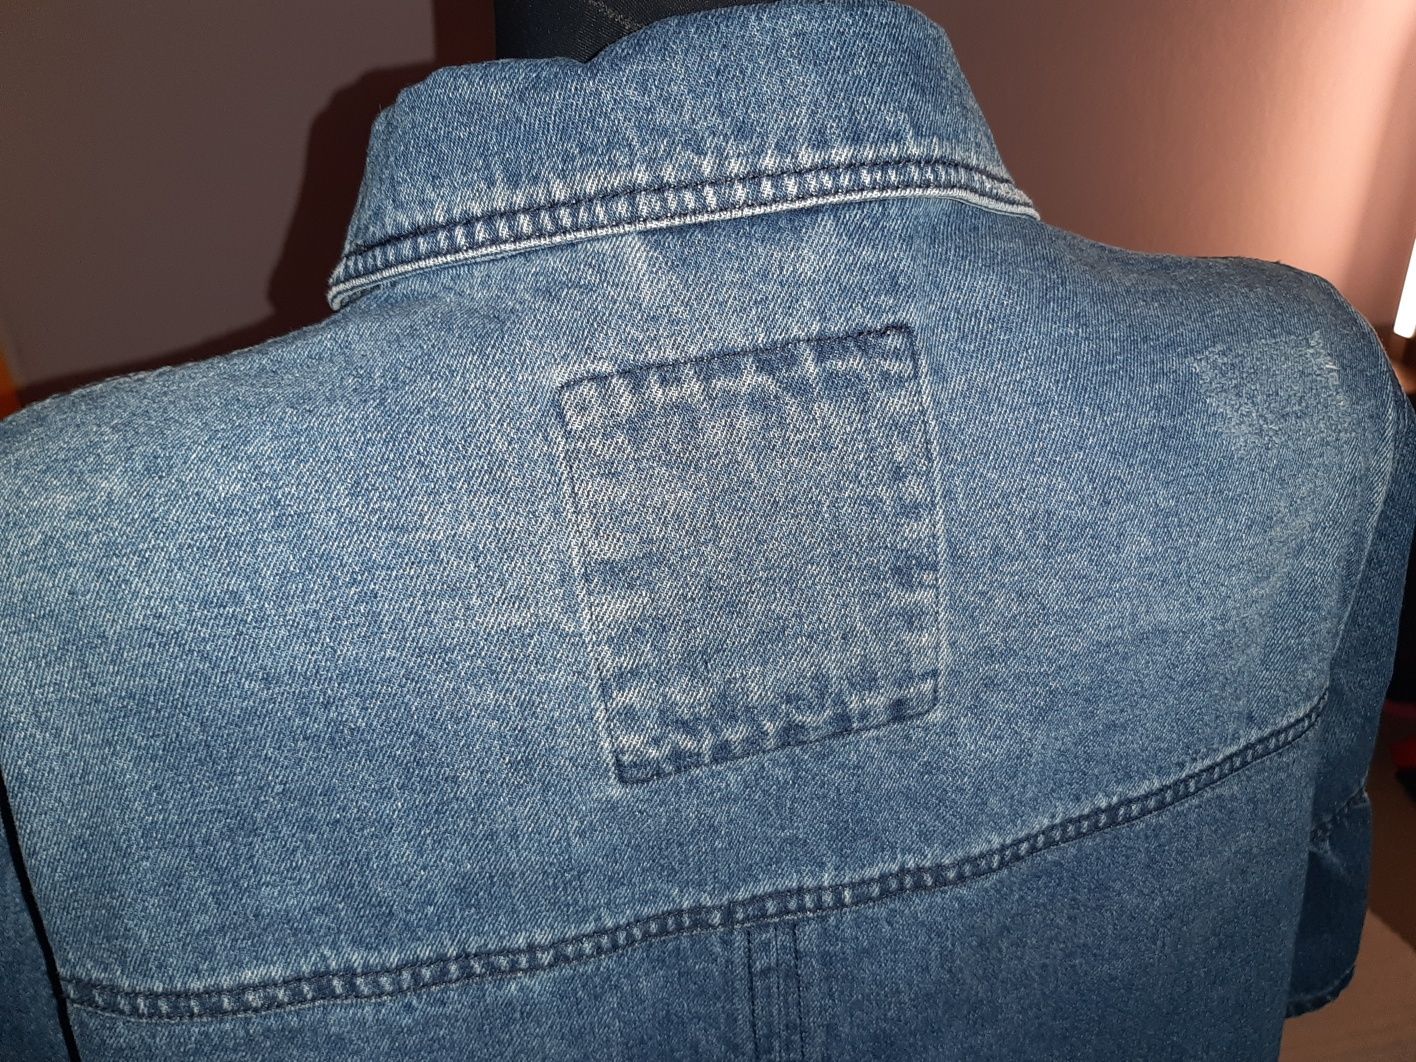 Esprit bluzka kurtka jeans oversize M  38 40 42